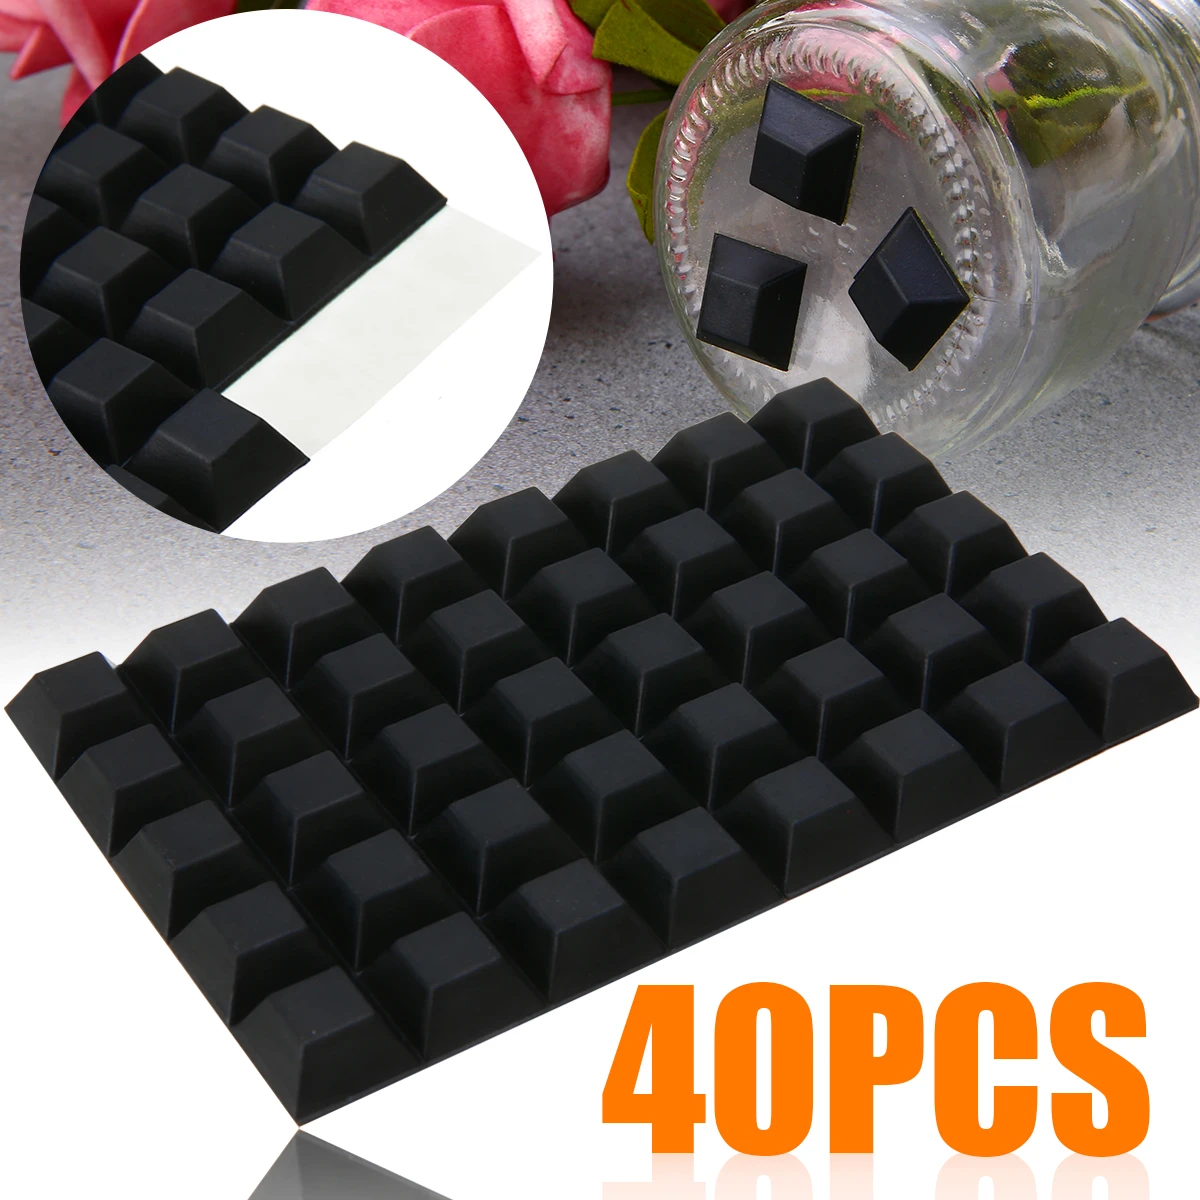 40pcs Self-Adhesive Rubber Bumper Stop Non-slip Feet Door Buffer Pads Wall Protectors Door Stopper For Furniture Accessory Black